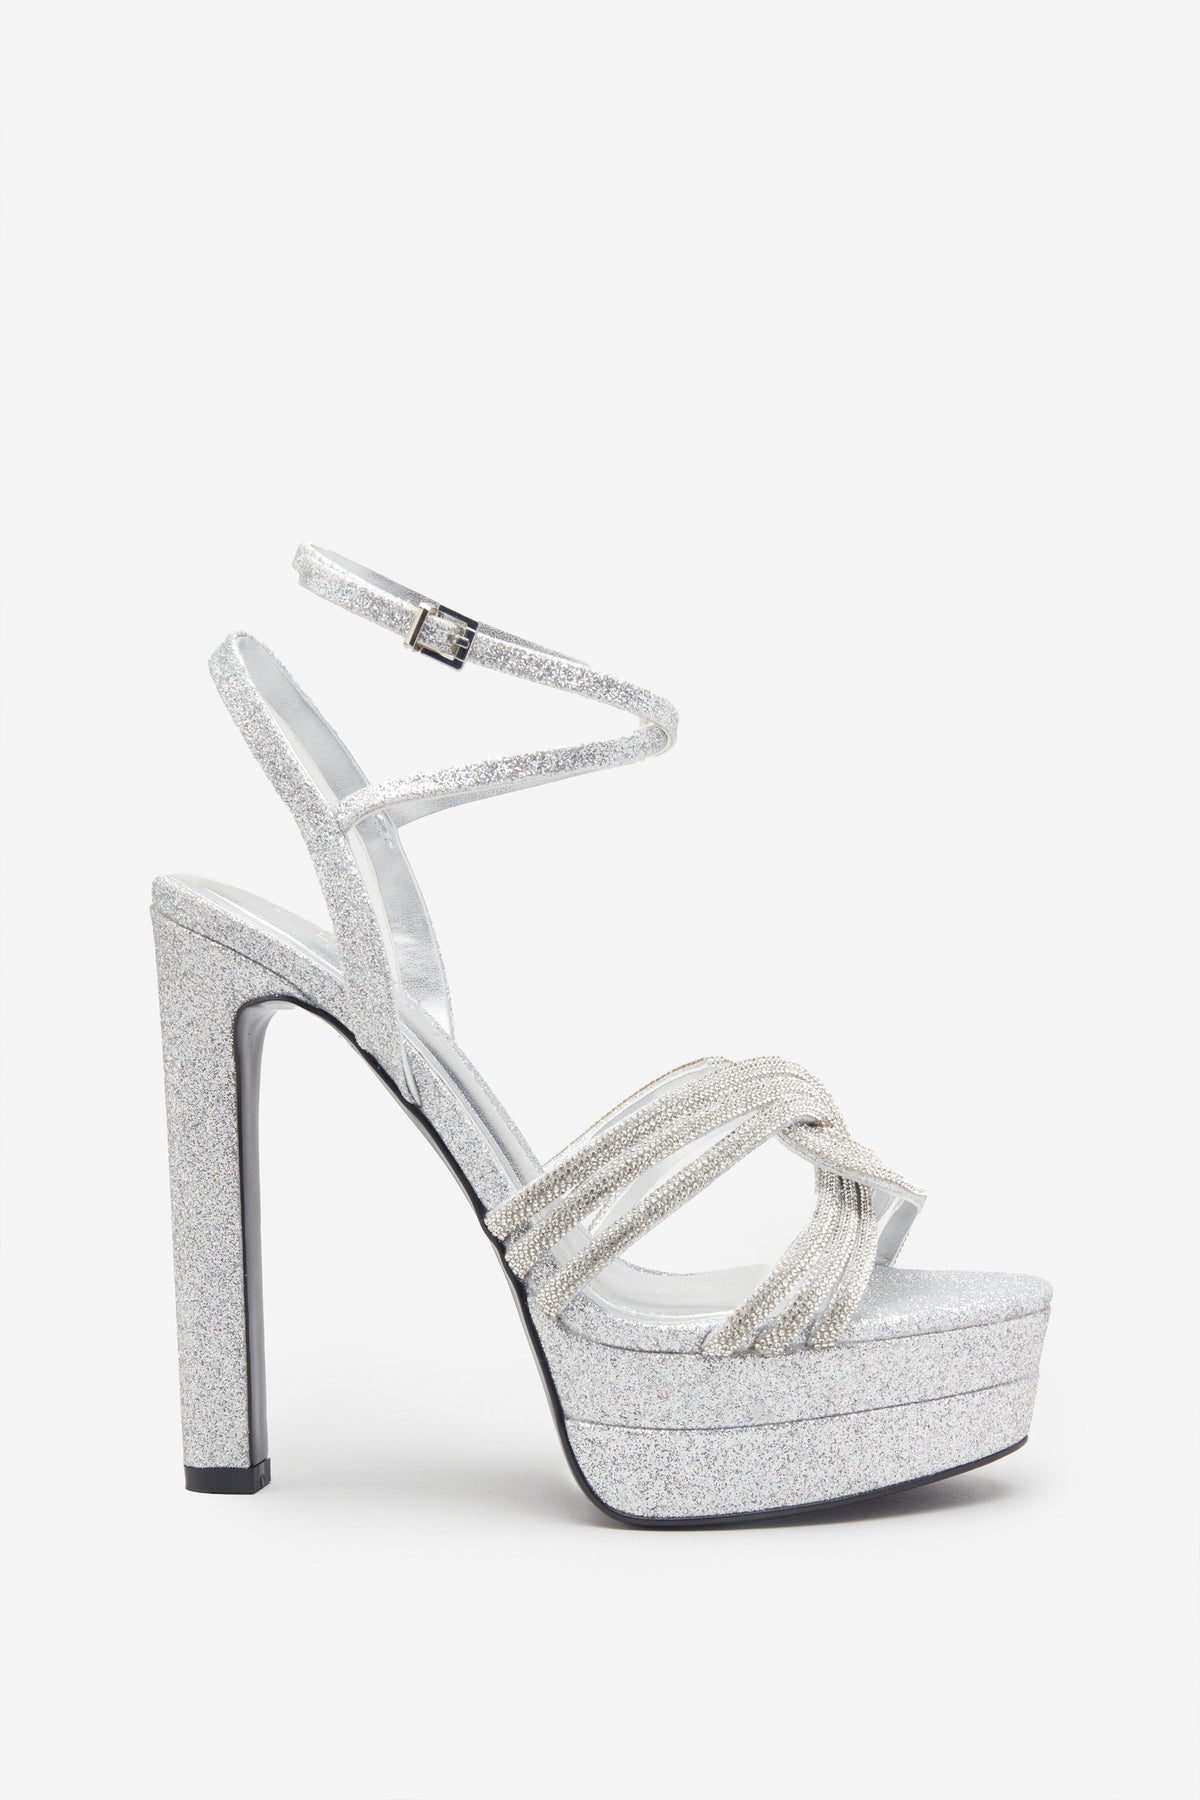 Stone & Beads Embellished Criss-Cross Grey Platform Heels | SHV-SP-87 |  Cilory.com